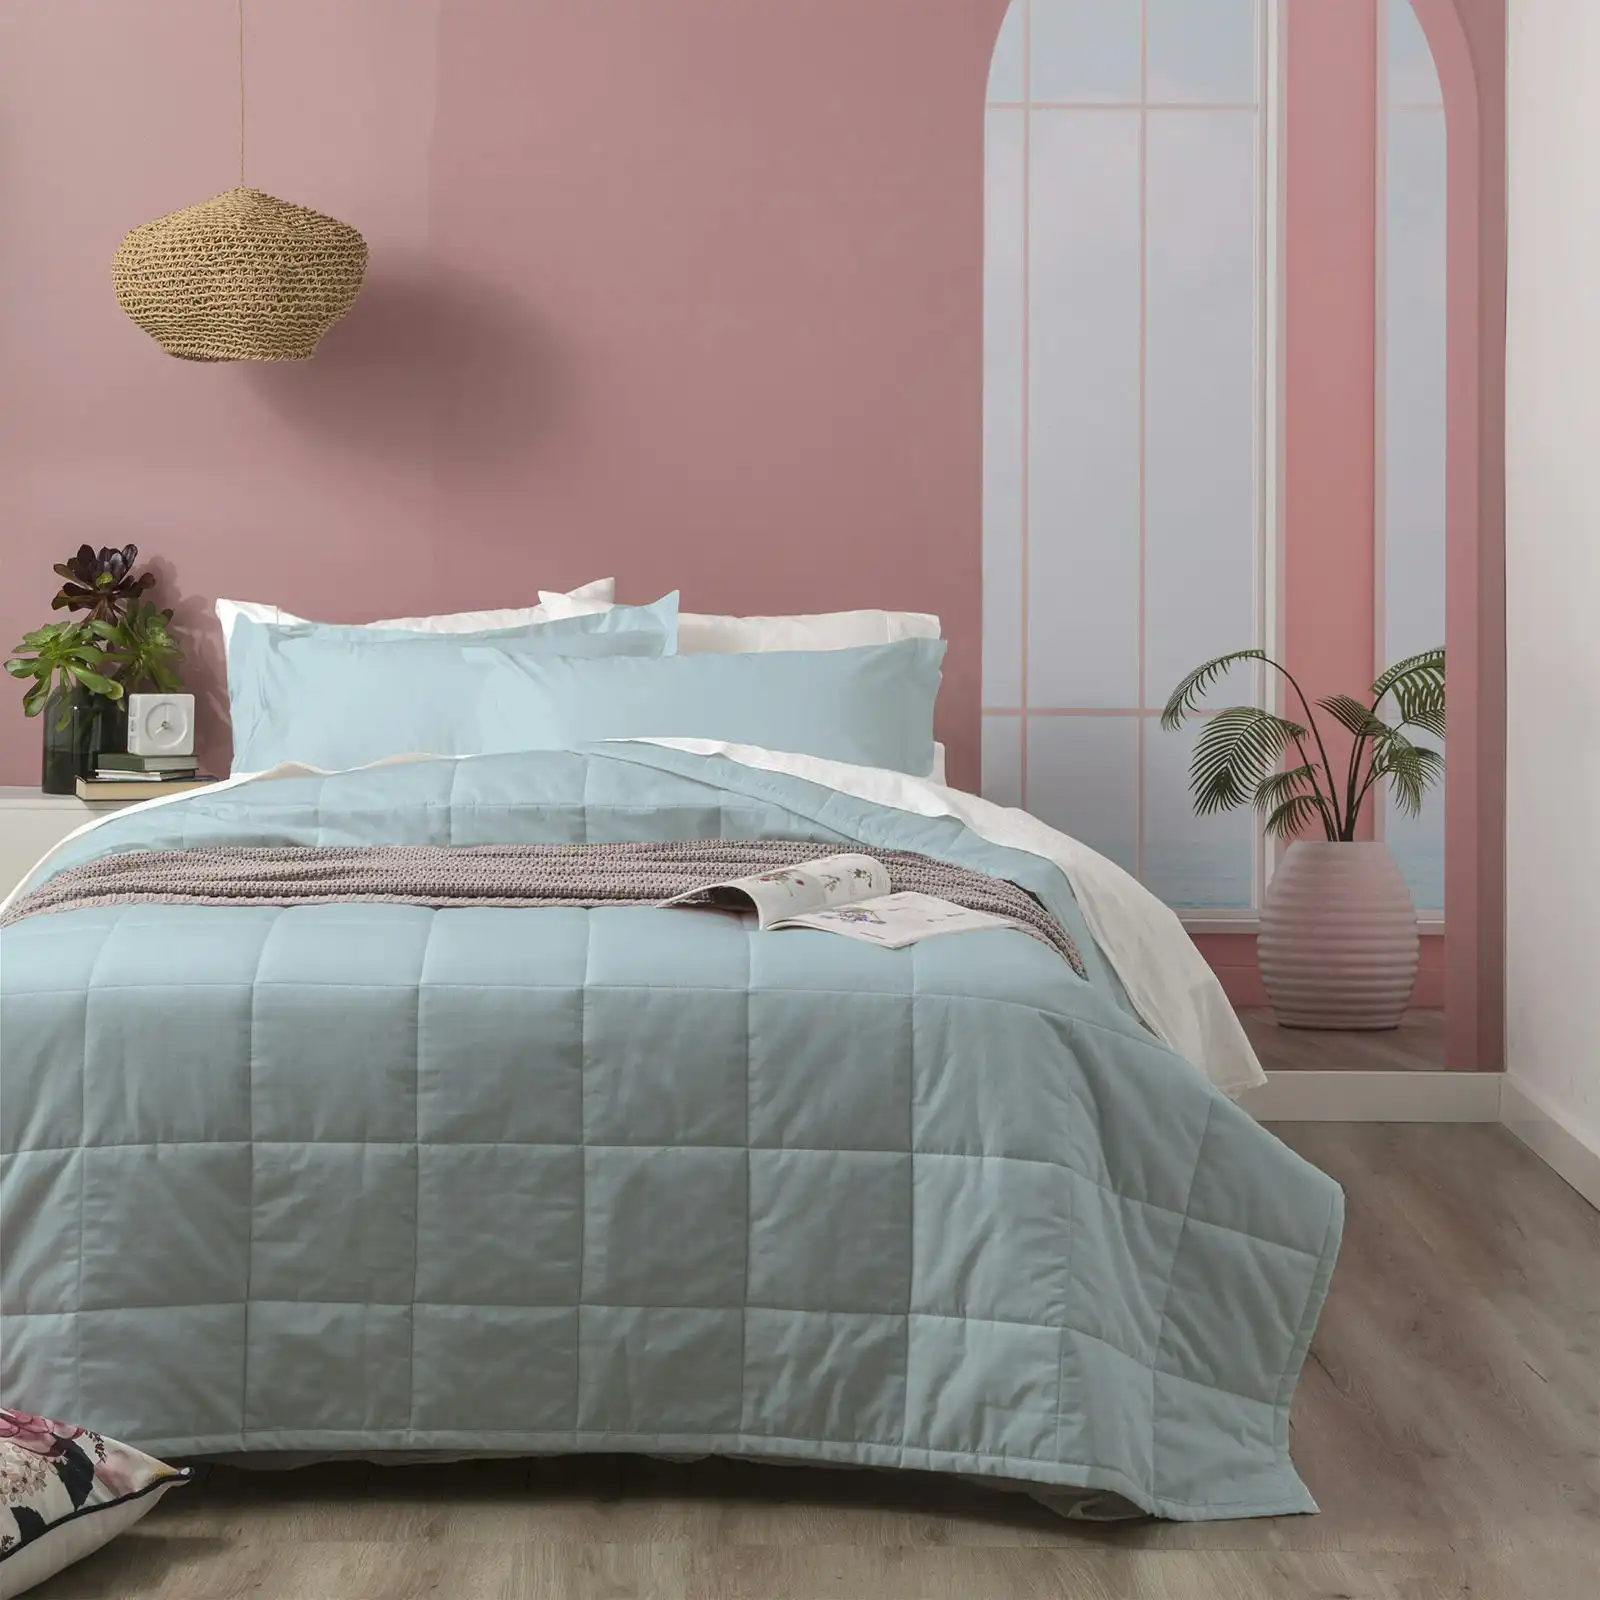 Ddecor Home Sofia King Bed Comforter Set 500TC Soft Cotton Jacquard Bedding Sky